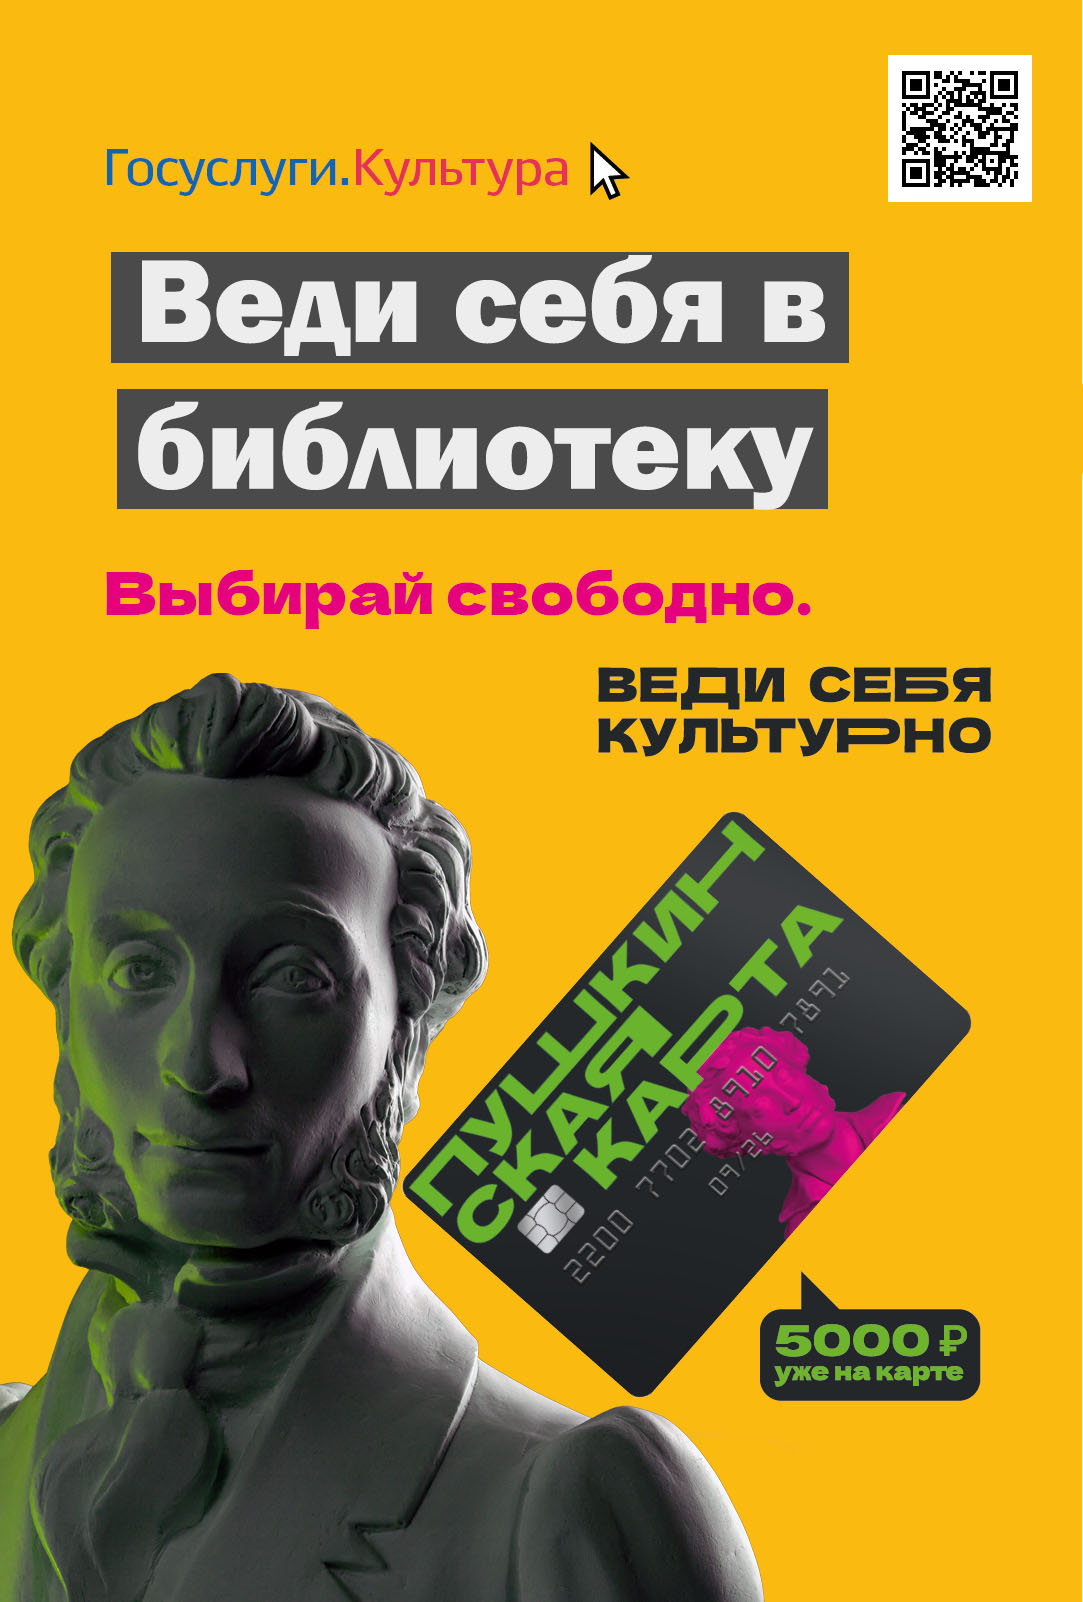 http://bogorod-mrb.ucoz.ru/Pushkin_card.jpg